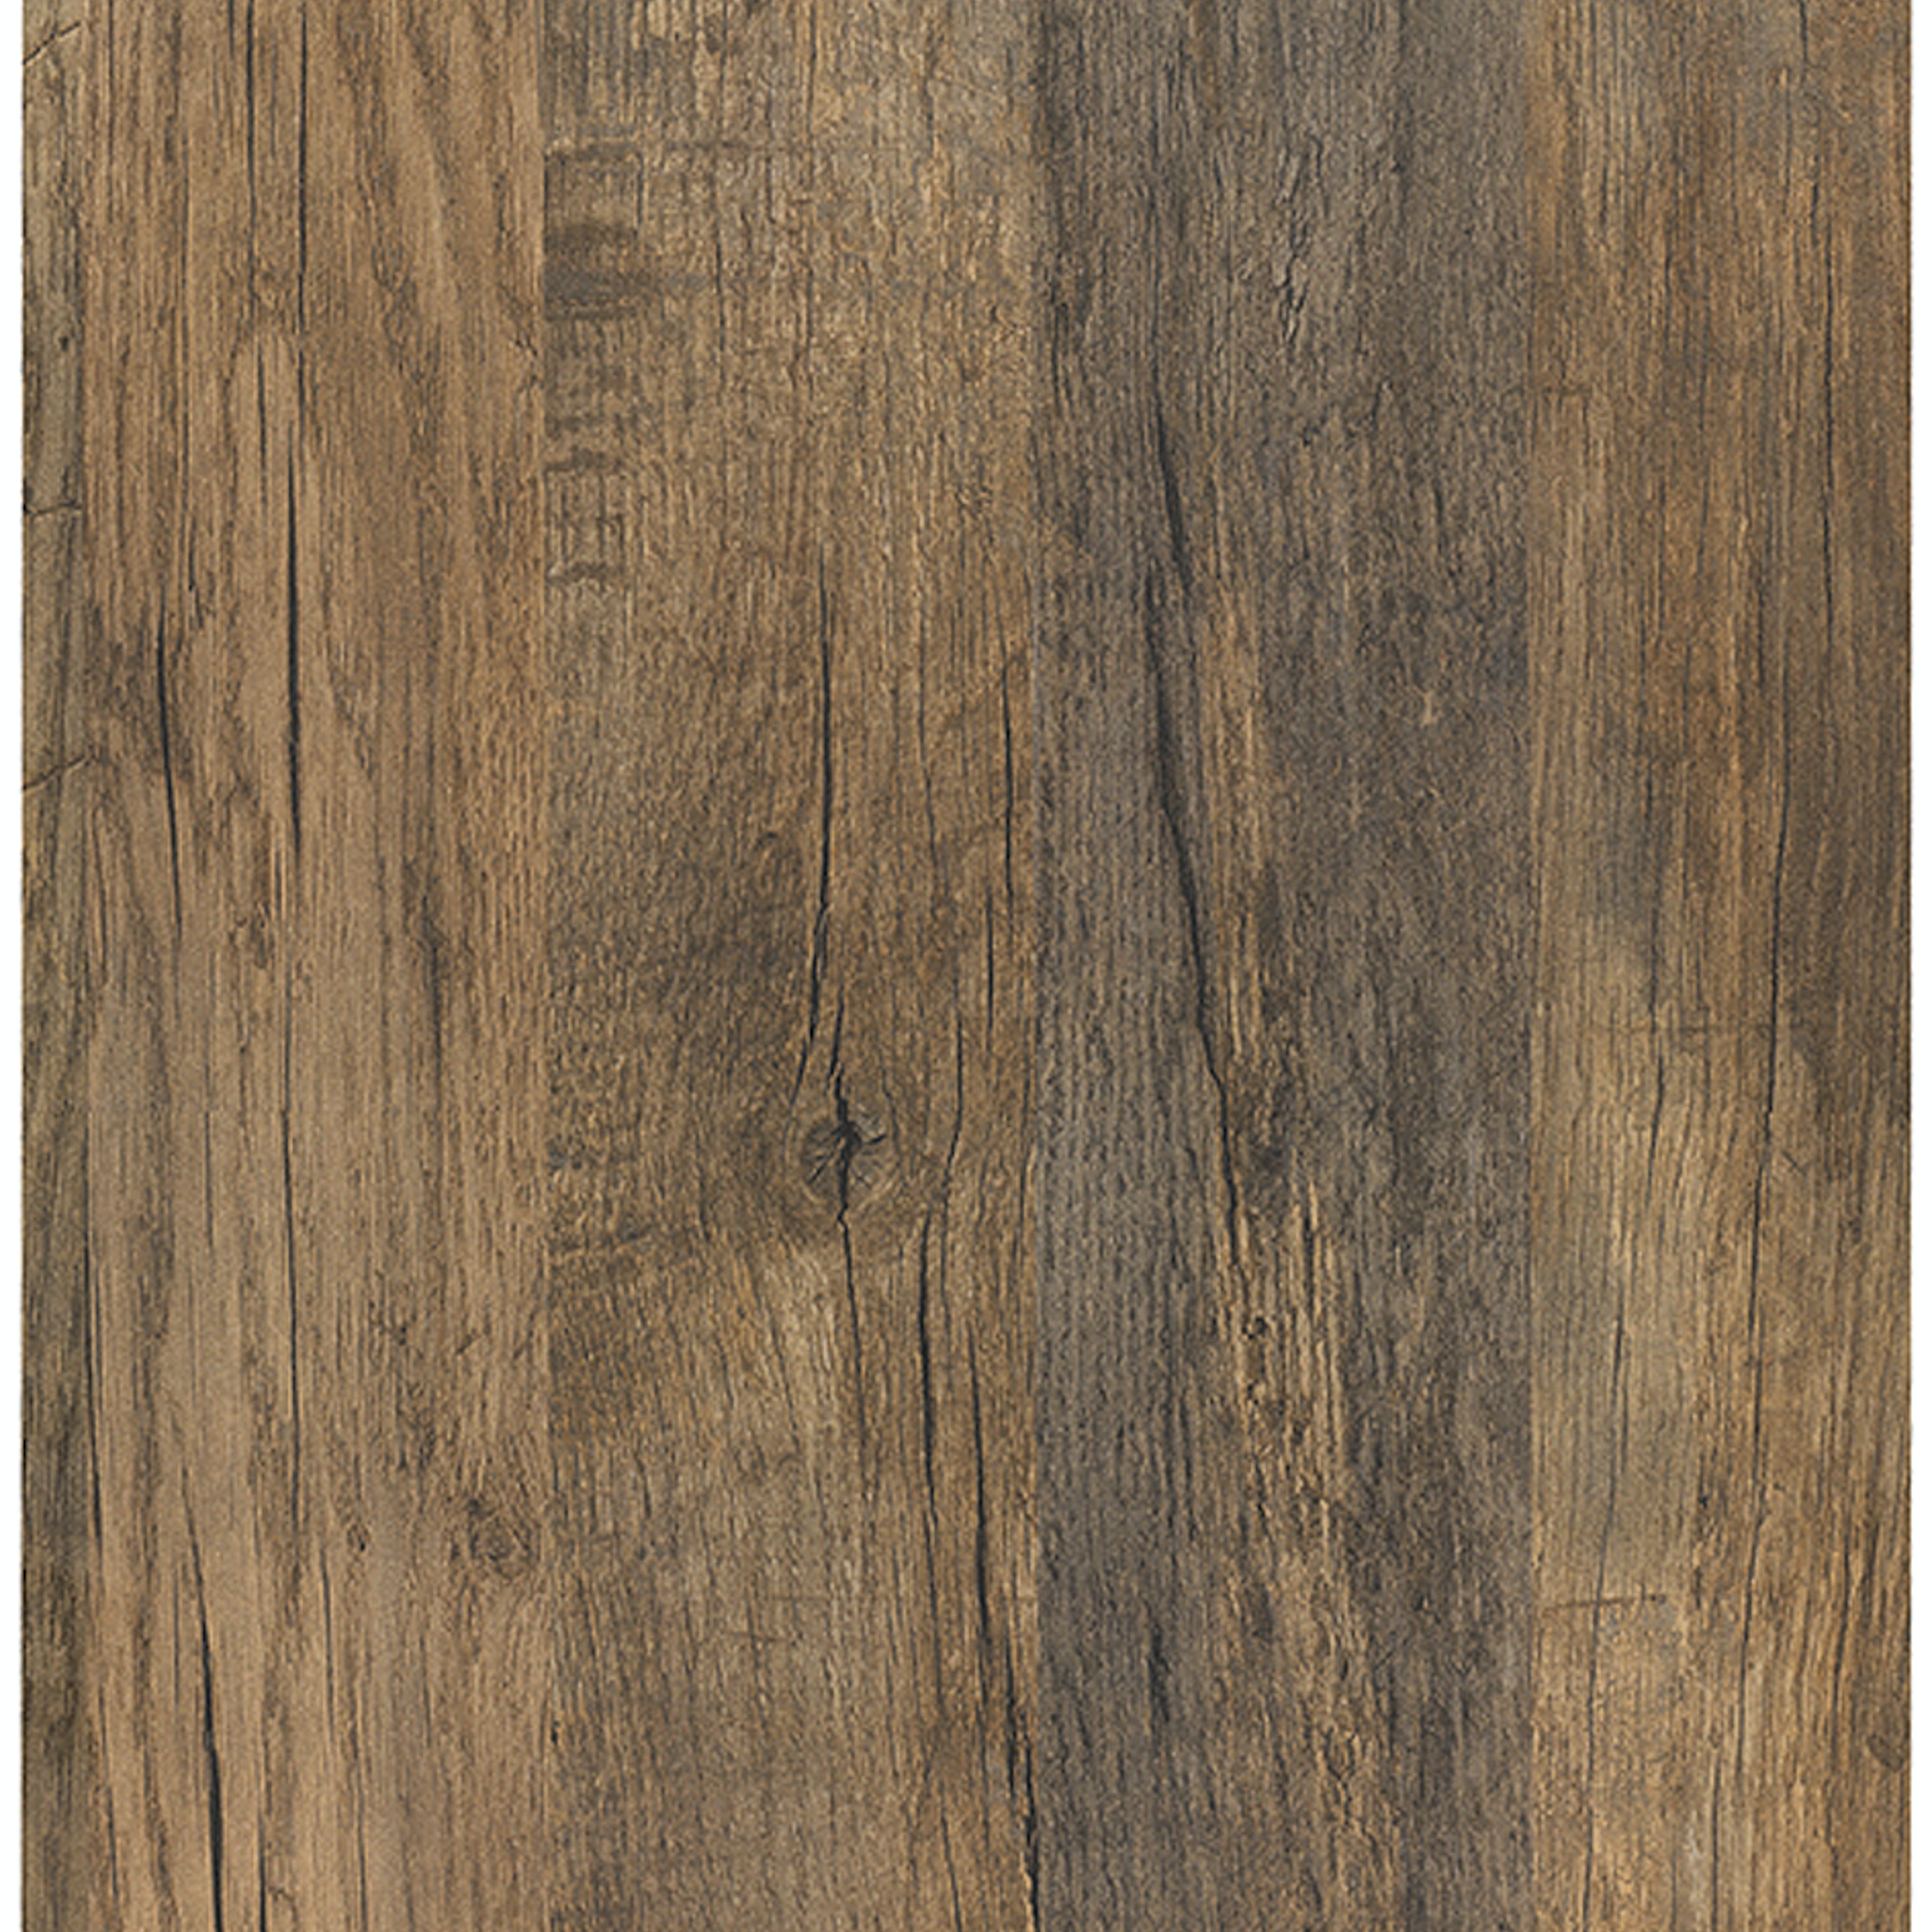 Kunststof hout decor keuken front (8070 Vintage eiken)